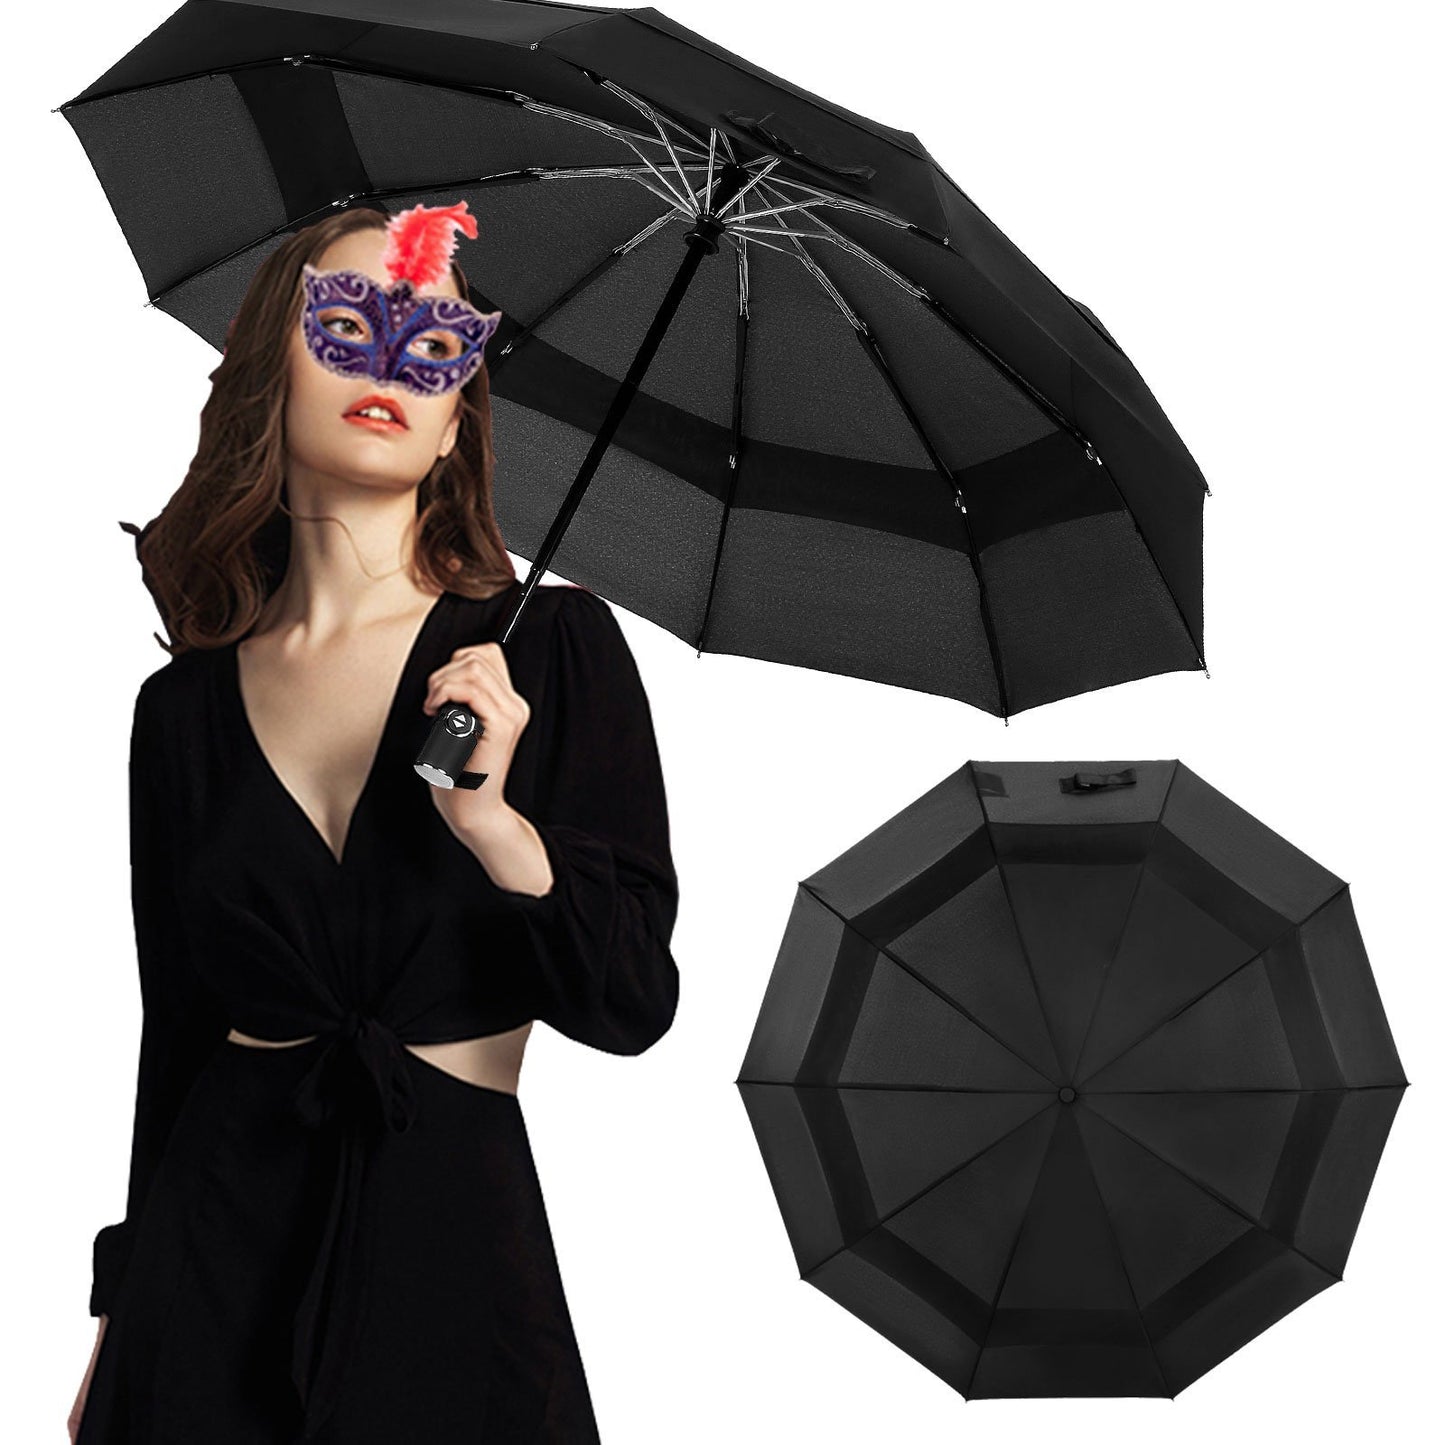 Umbrella Windproof Travel Umbrella, Compact Folding Umbrella, Vented Double Canopy Auto Open Close 10 rib - Black